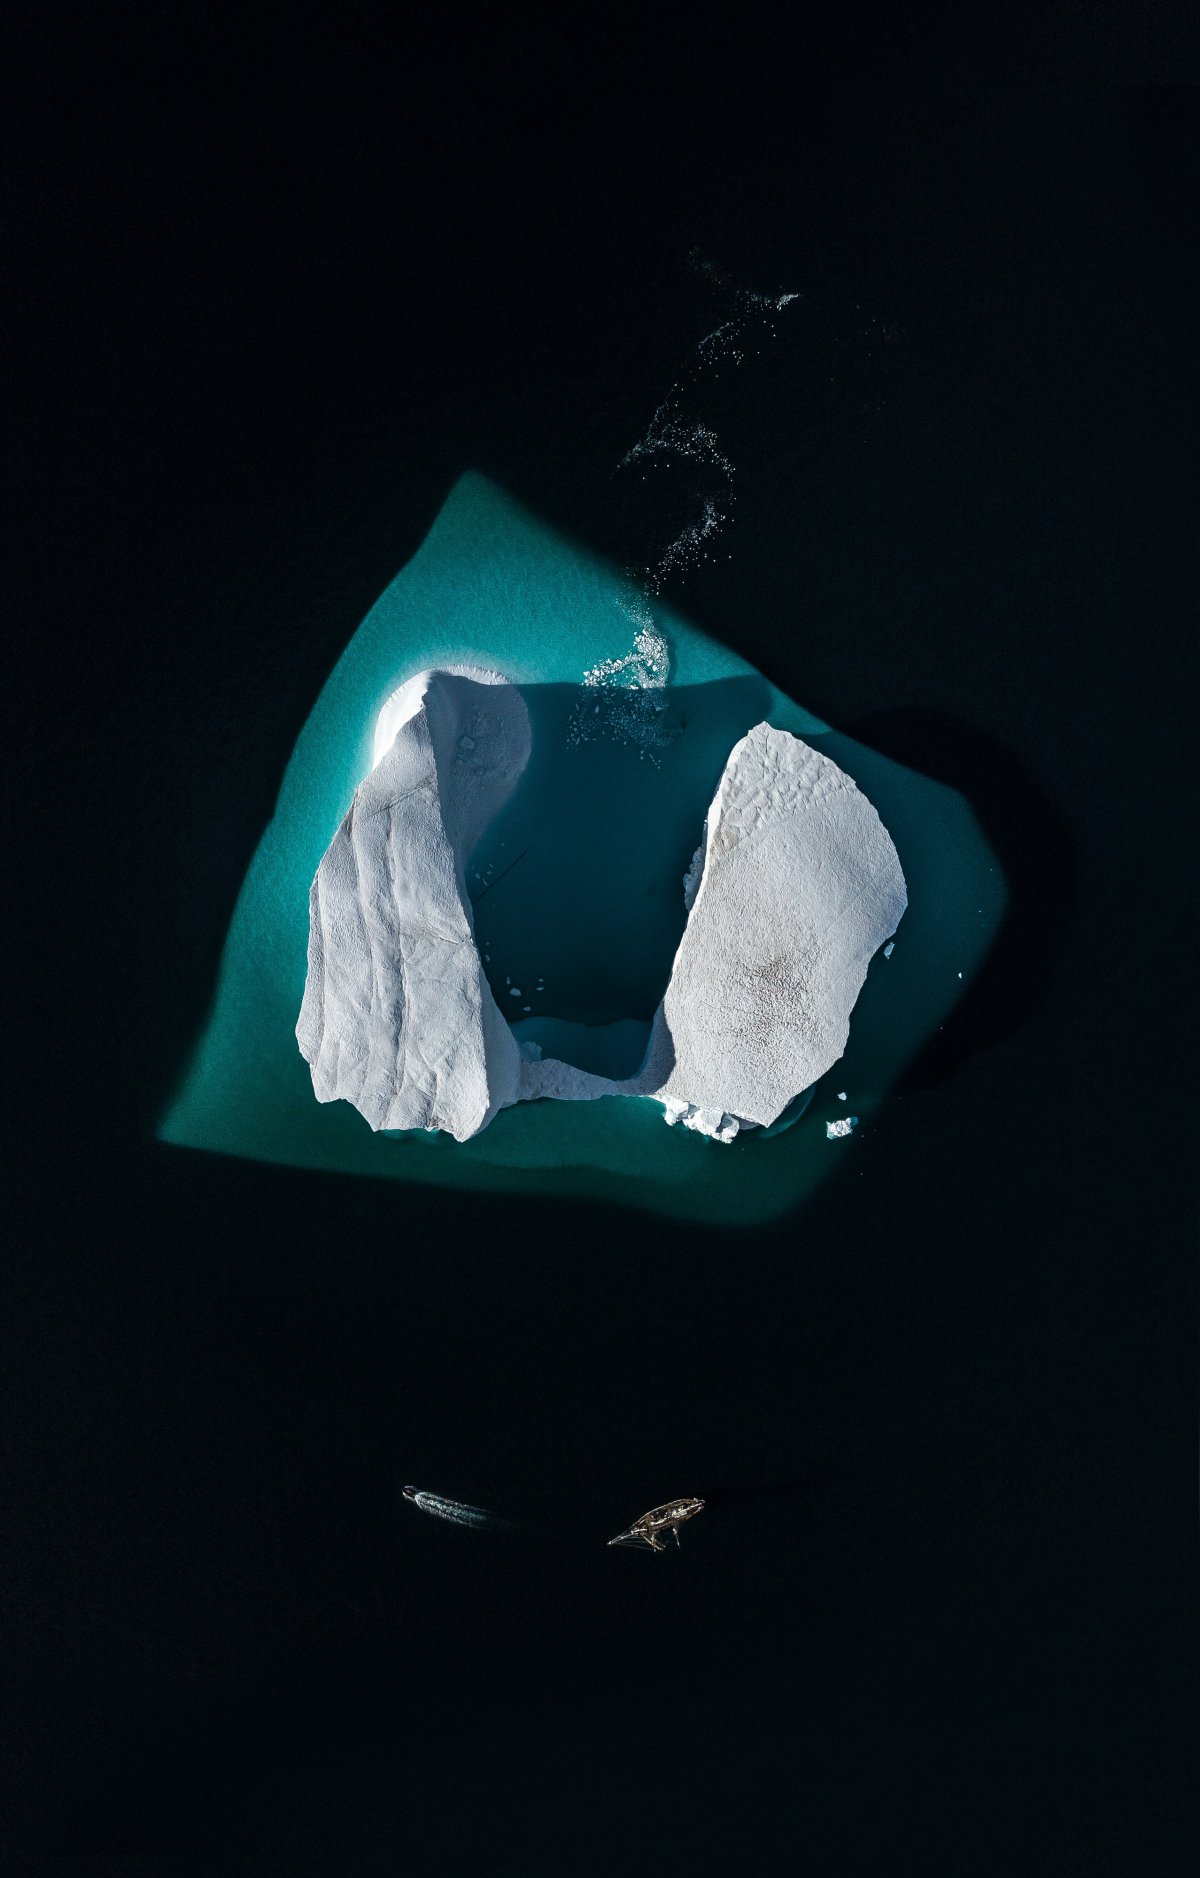 Pictures of icebergs in polar regions